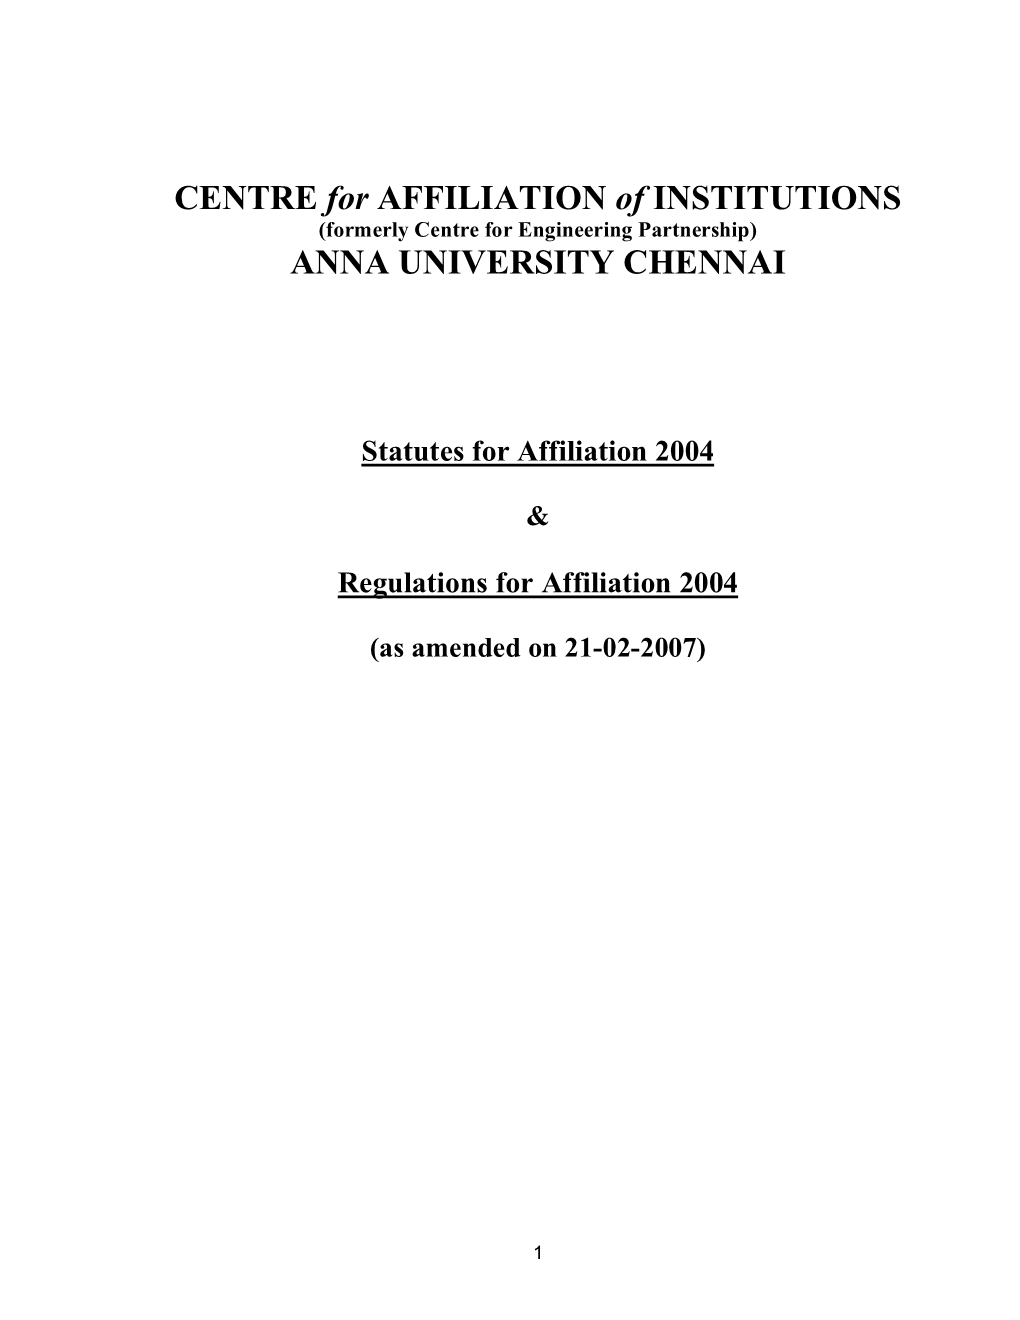 Anna University Statutes & Regulations for Affiliation